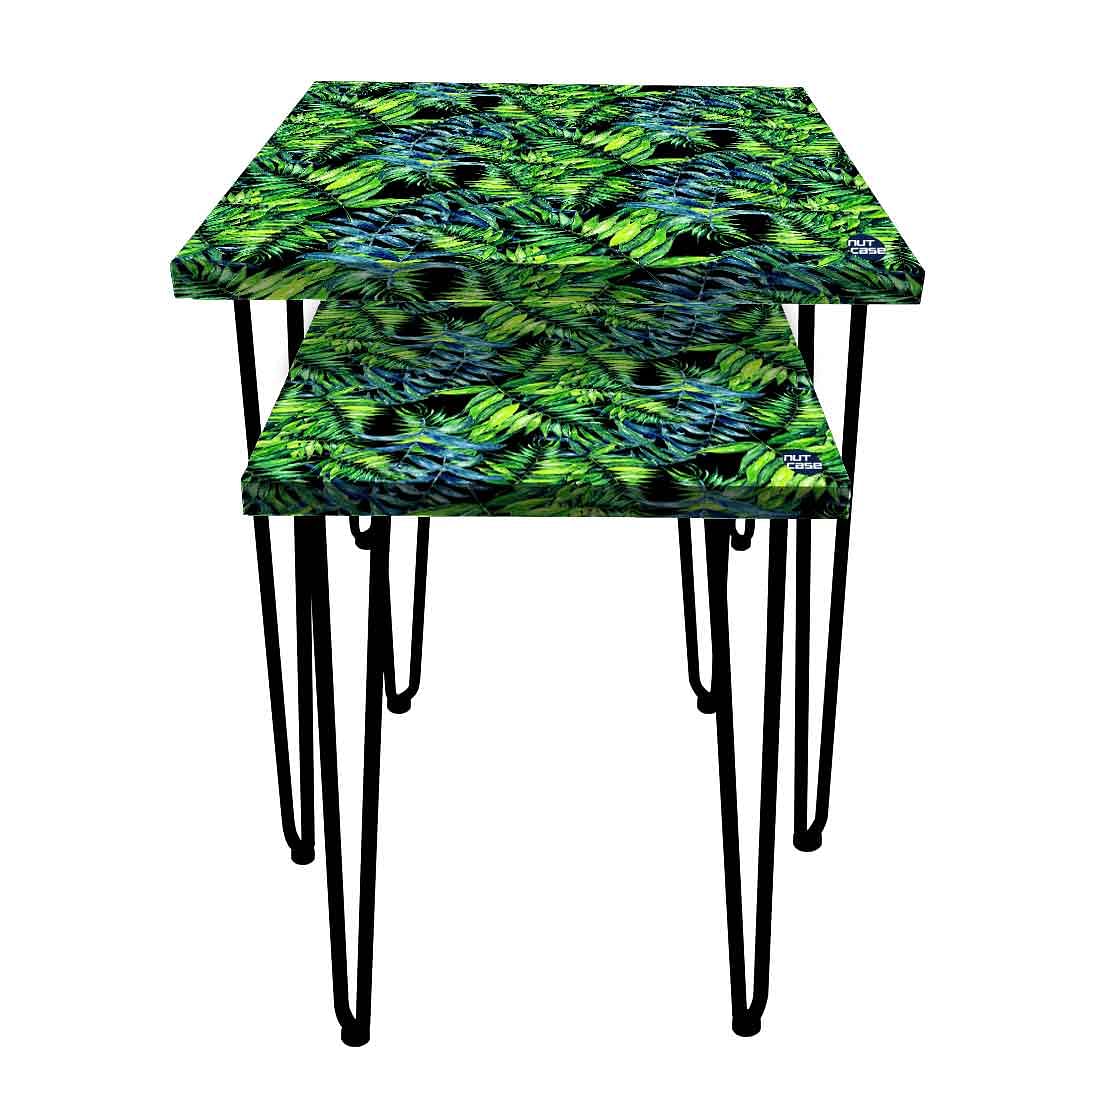 2 Nesting Coffee Table for Living Room Decor - Green Black Leaf Nutcase